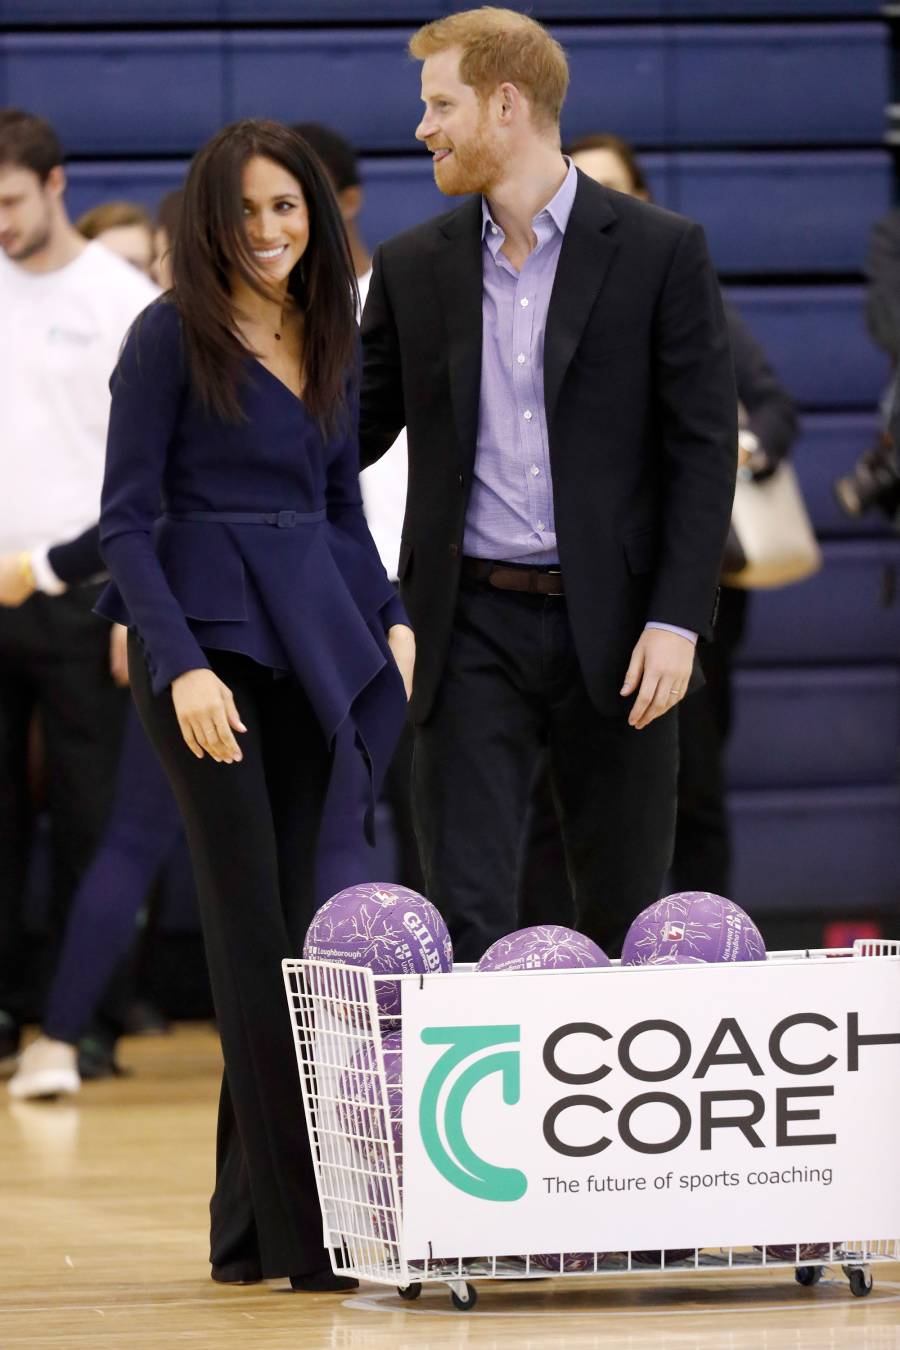 Megan Markle Plays Basketball in Oscar De La Renta and Heels at Royal Function With Prince Harry